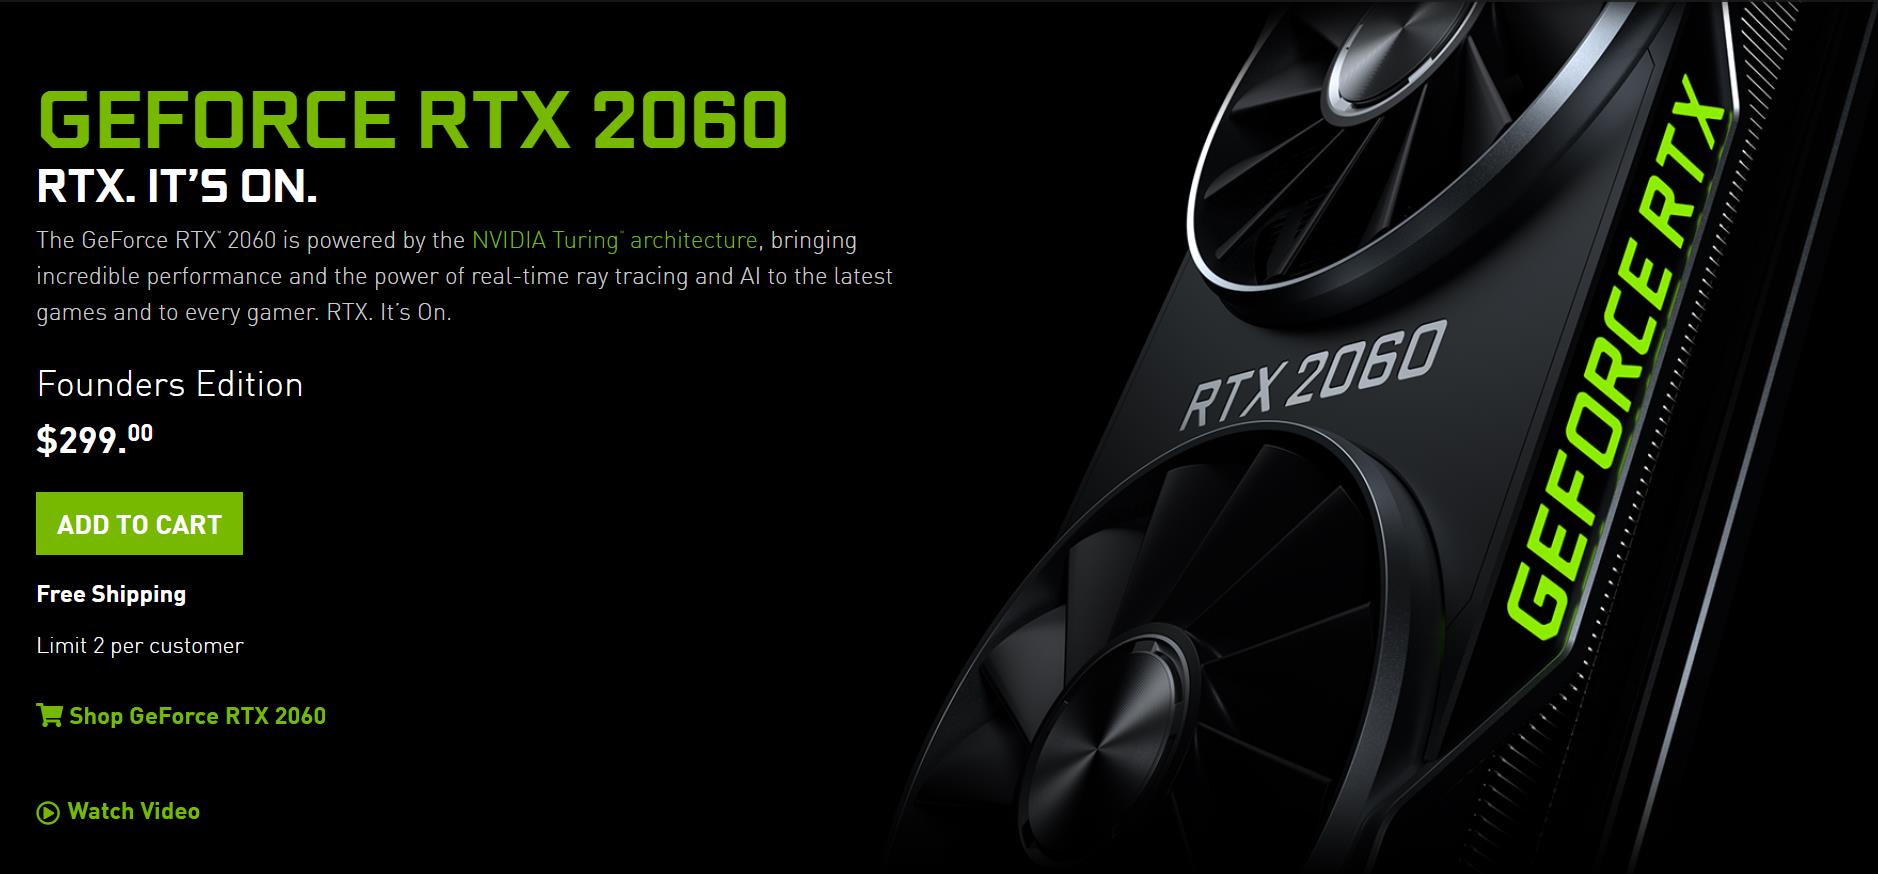 Nvidia GeForce RTX 2060 indirime girdi